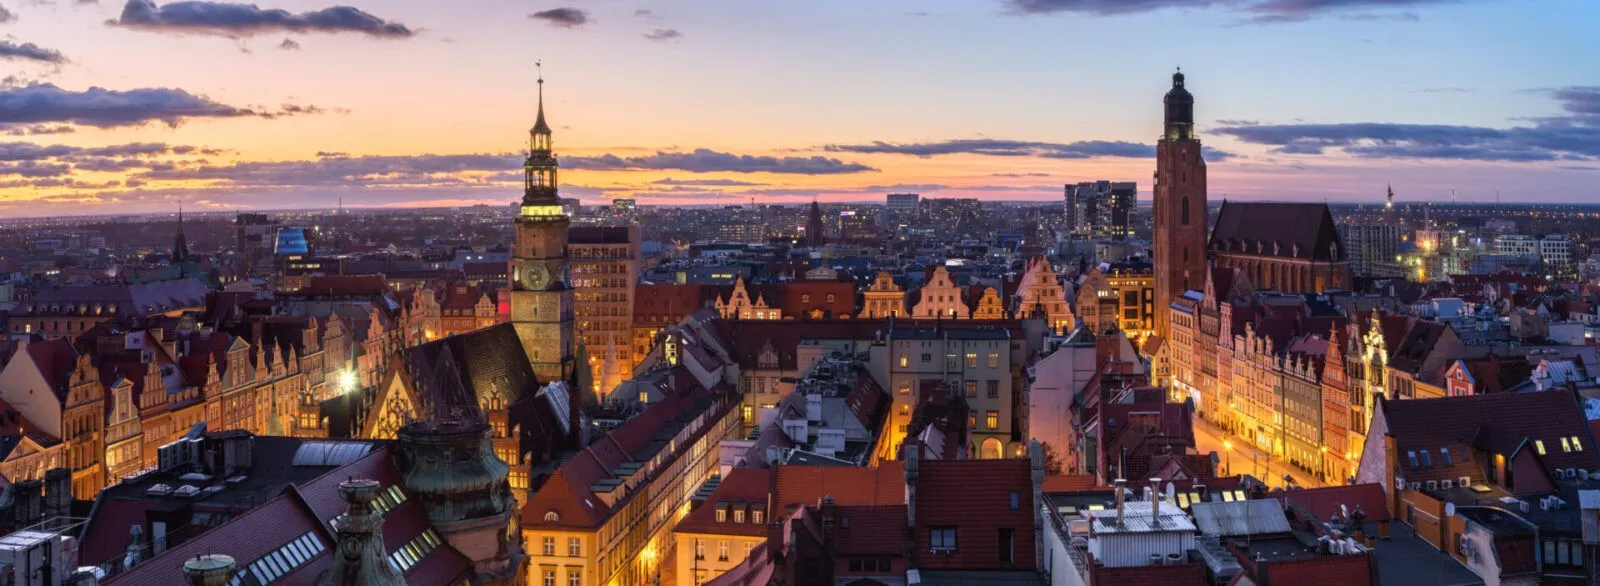 Wroclaw, Poland. Aerial cityscape